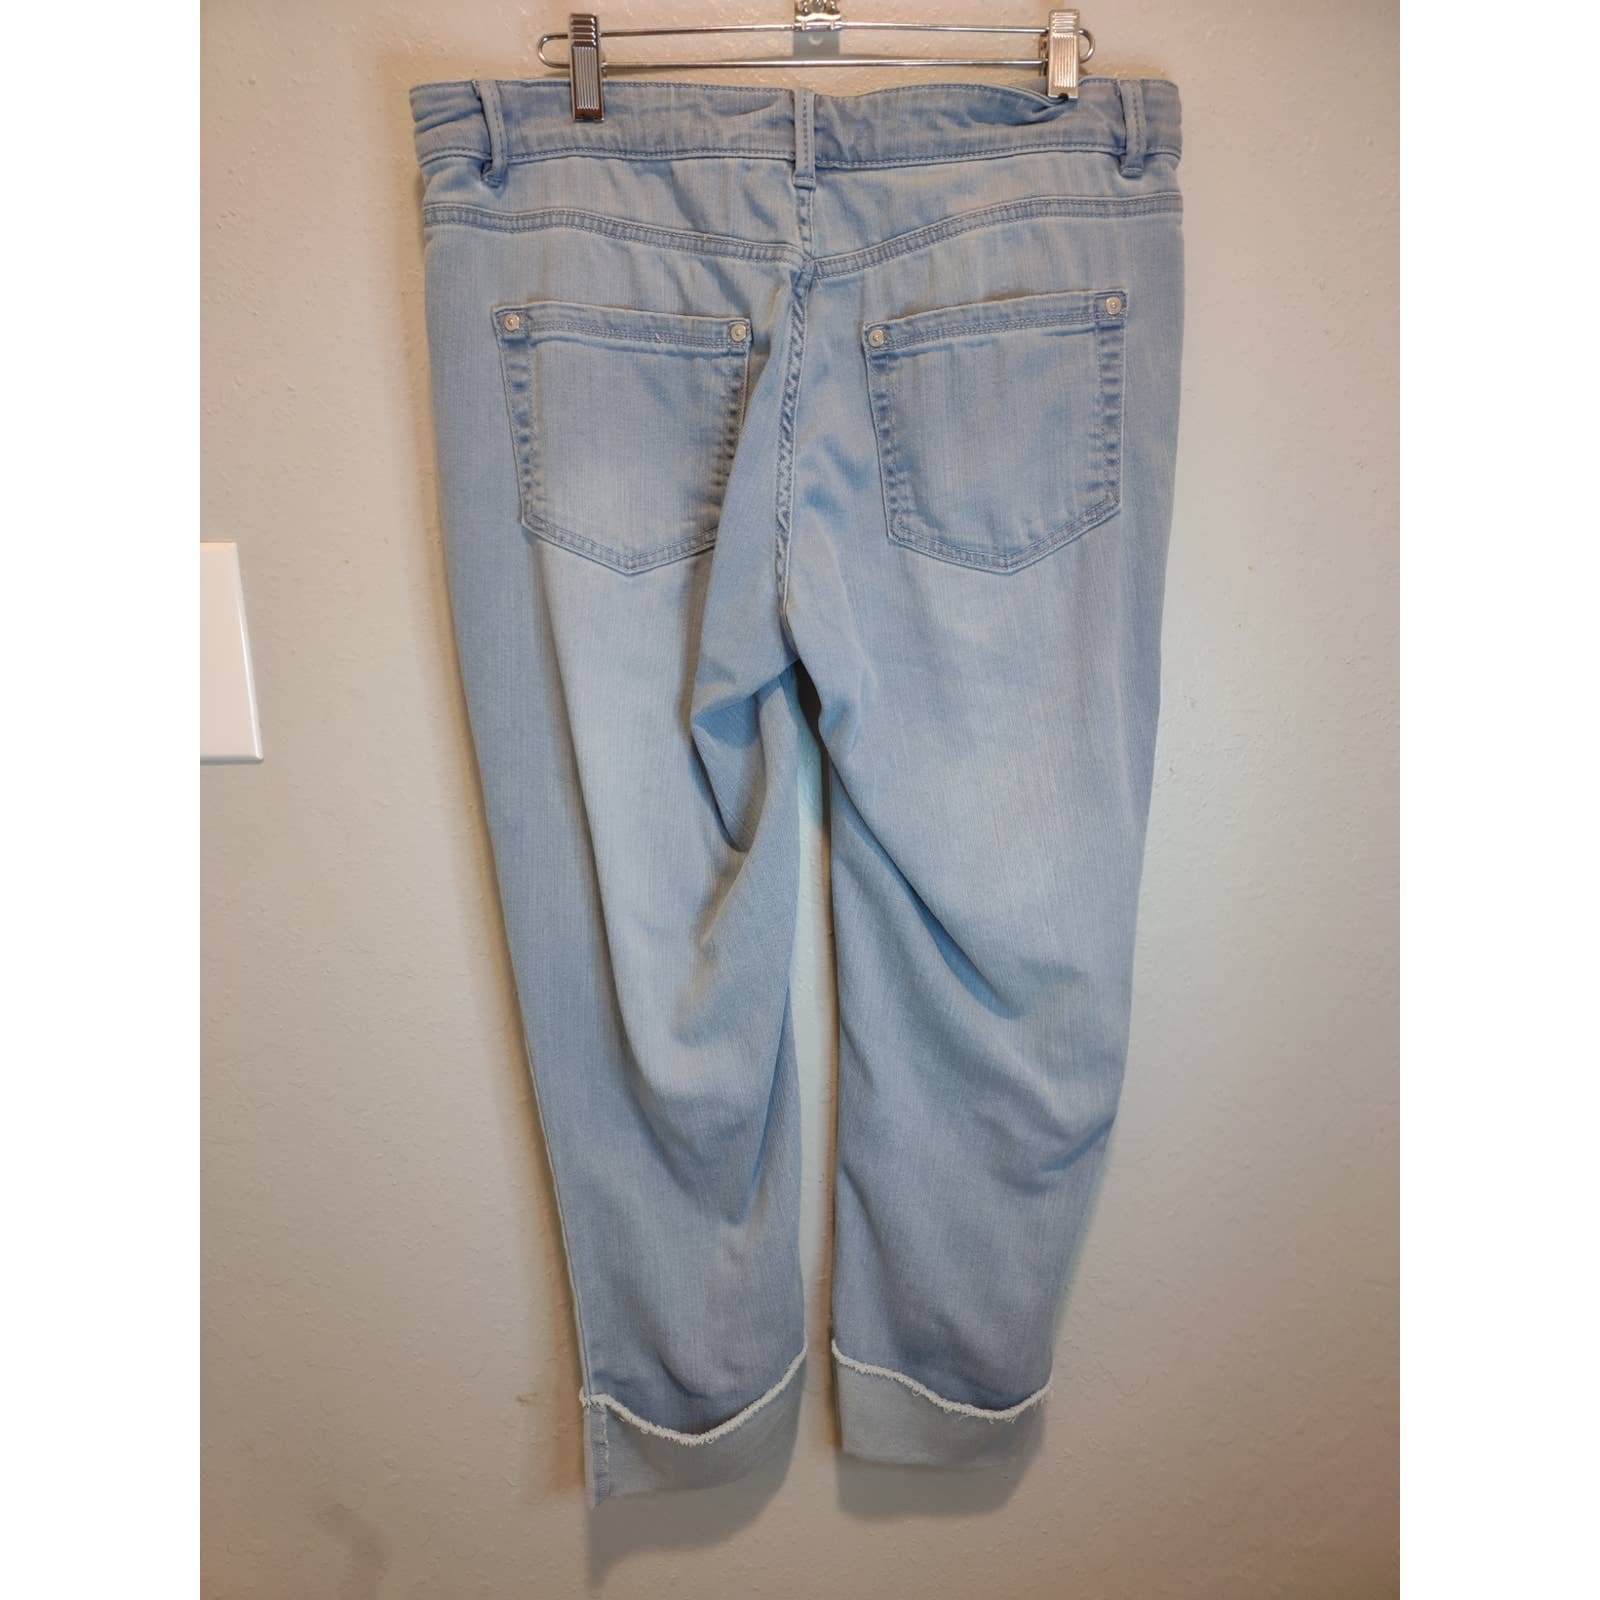 Comfortable J. Jill Denim Authentic Fit Cropped Jeans size 10 pcP4rI73L Fashion